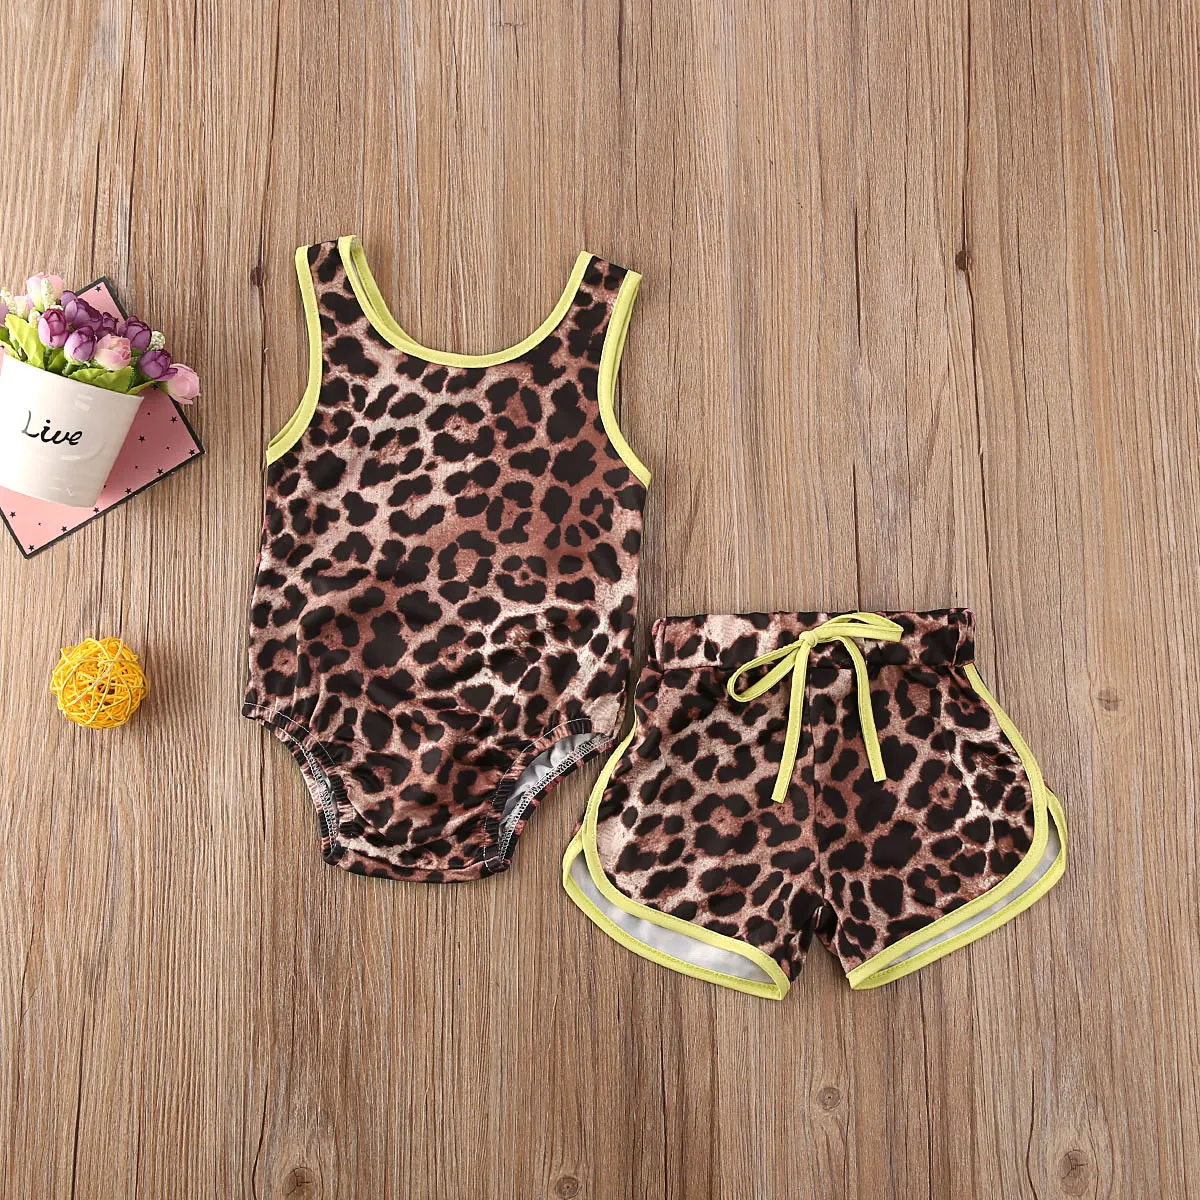 

Hirigin Cute Baby Swimming Suit Leopard Bikini Set 2121 Summer 2 Pecs Set Swimsuit Girls Beach Bathing Suit Swimwear 0-24M Fits